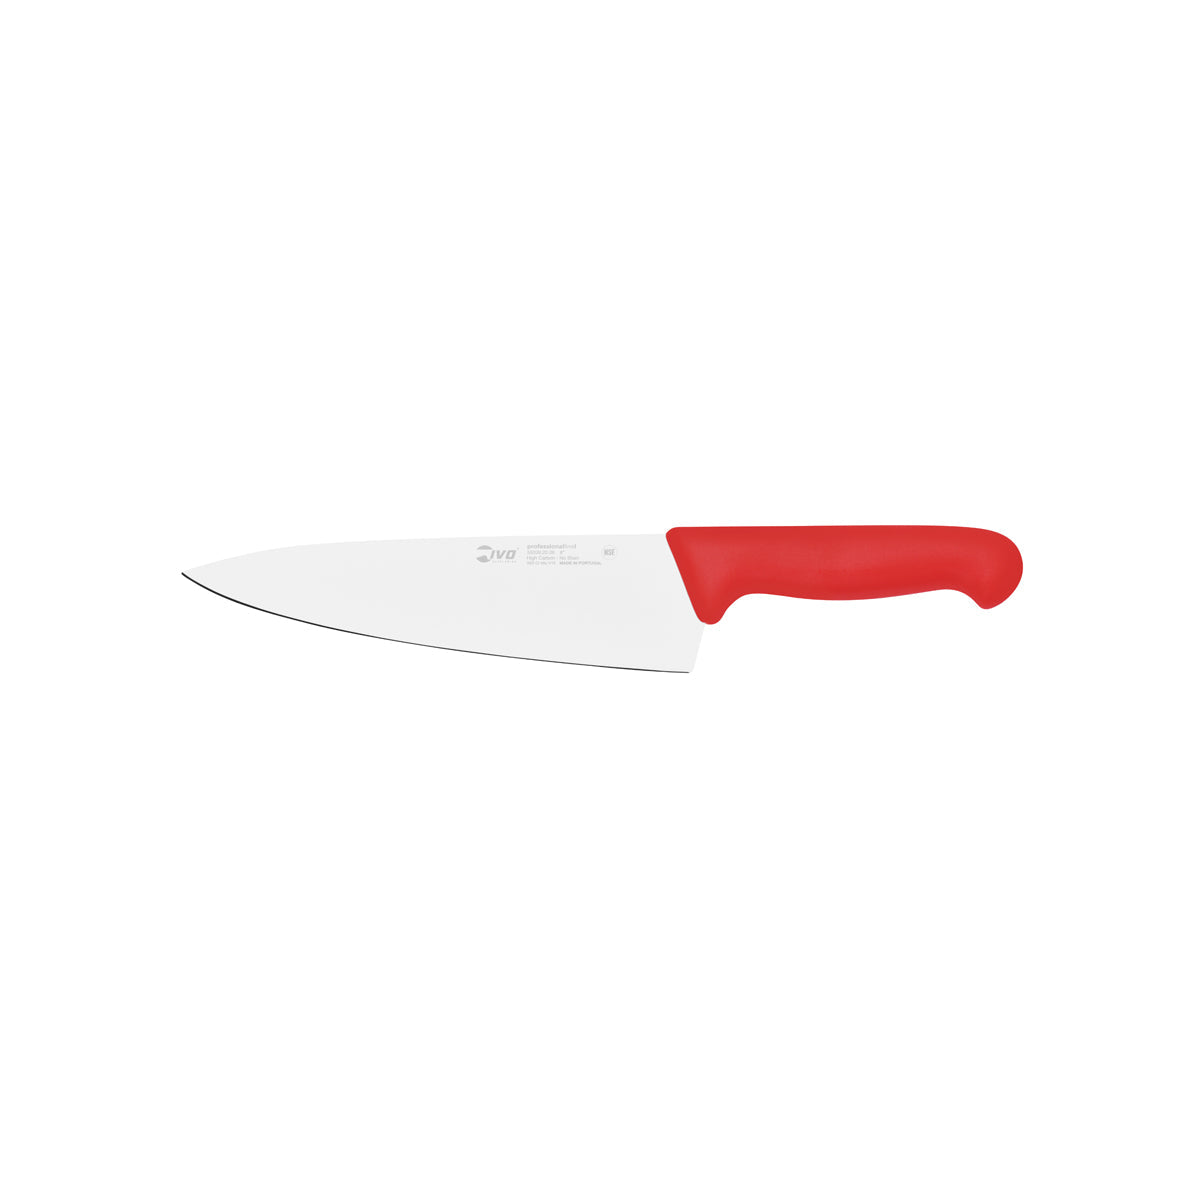 25463 Ivo Professional Line I Chefs Knife Red 200mm Tomkin Australia Hospitality Supplies